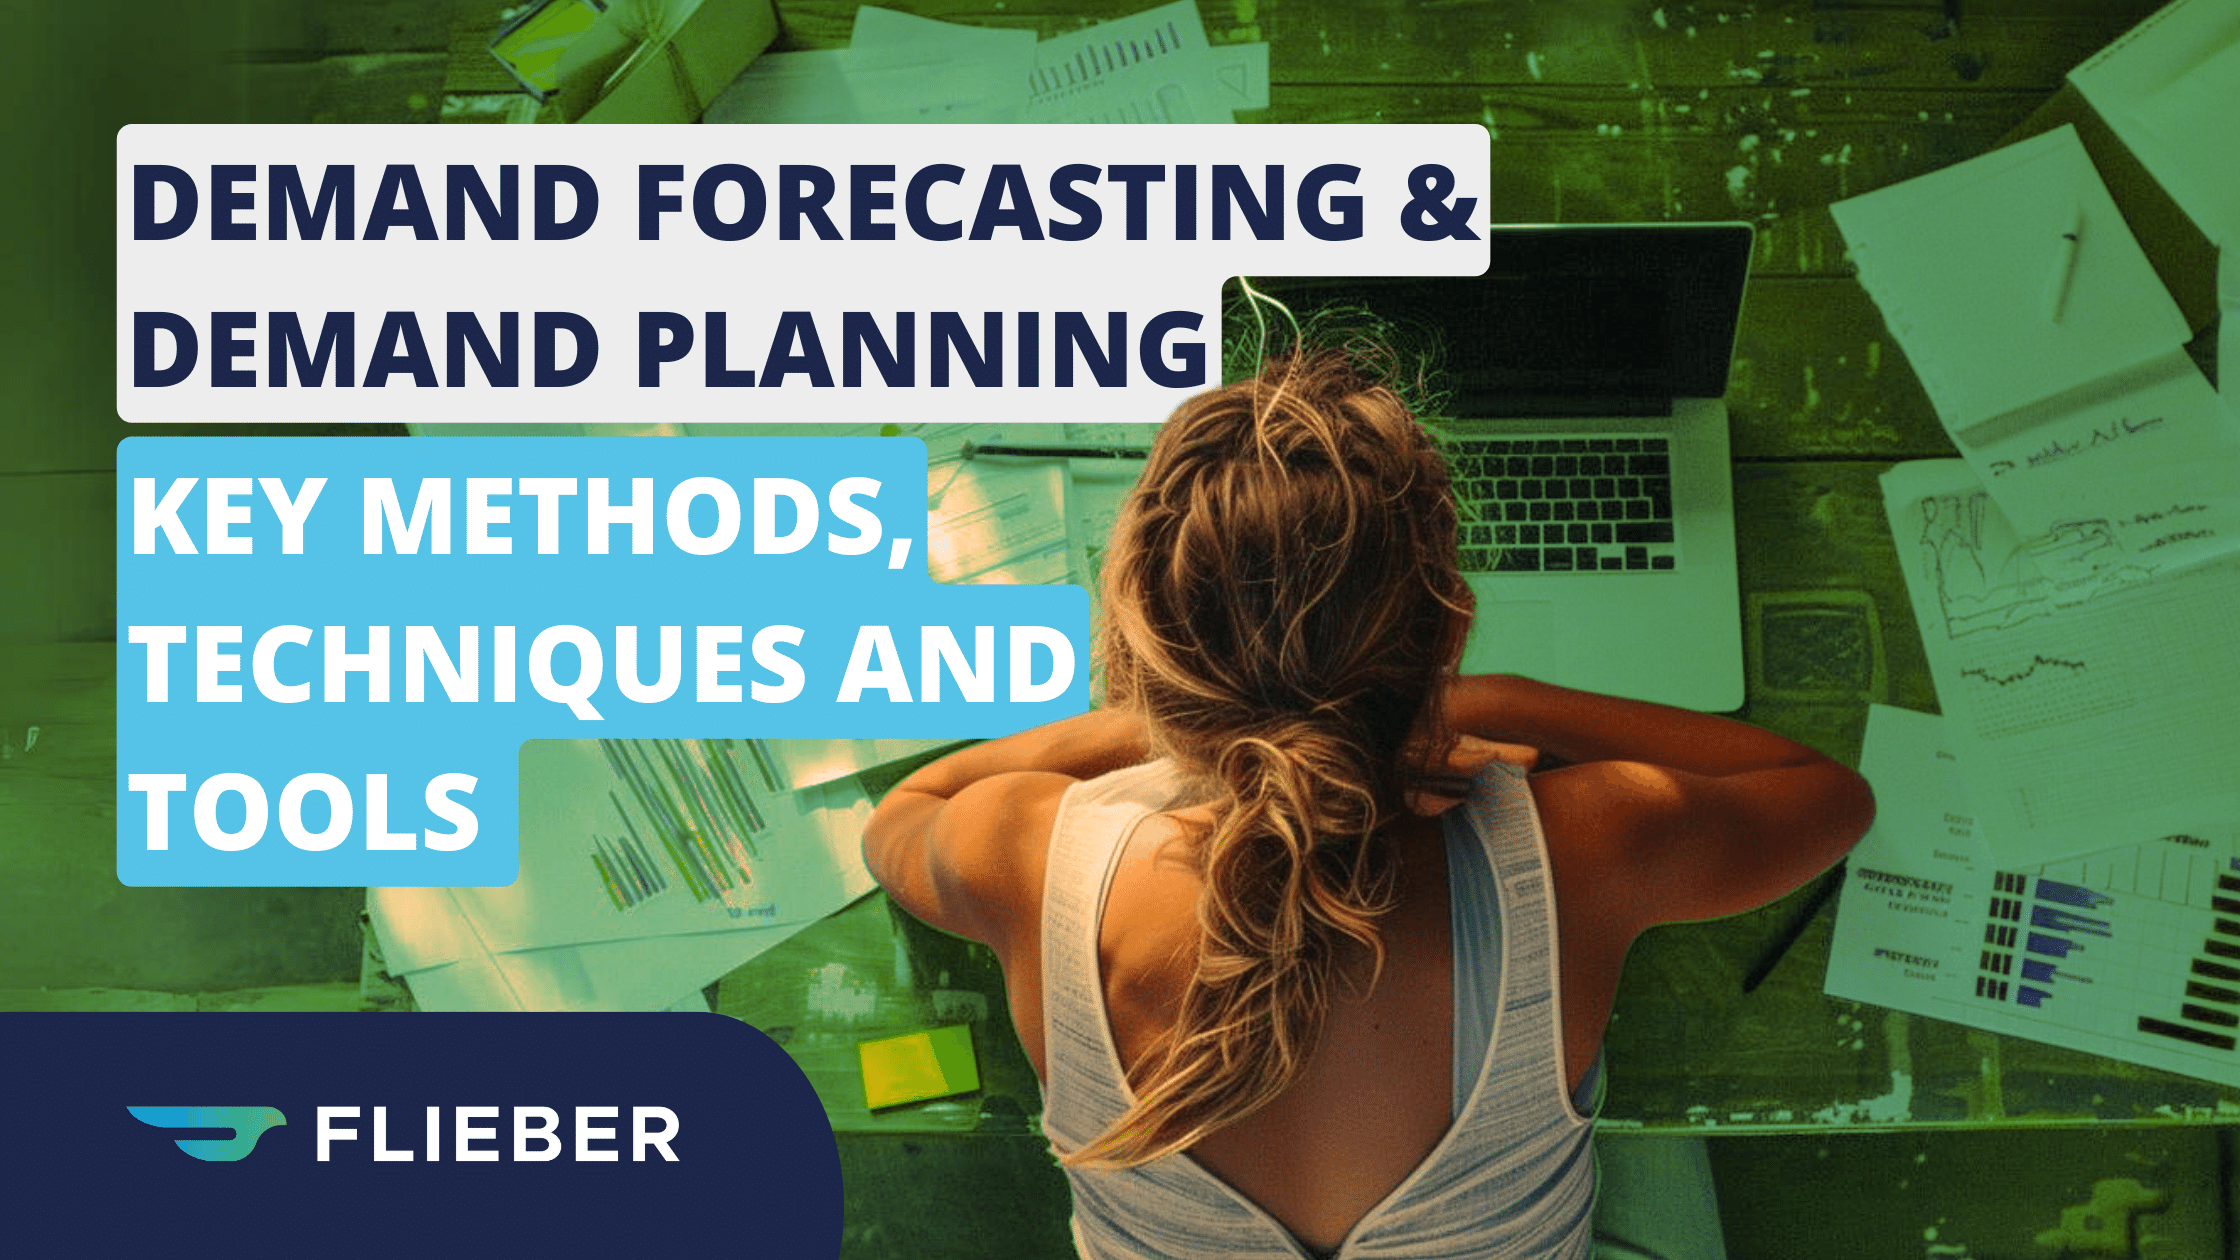 24 03 14 Blog   Demand Forecasting Vs. Demand Planning (1) 